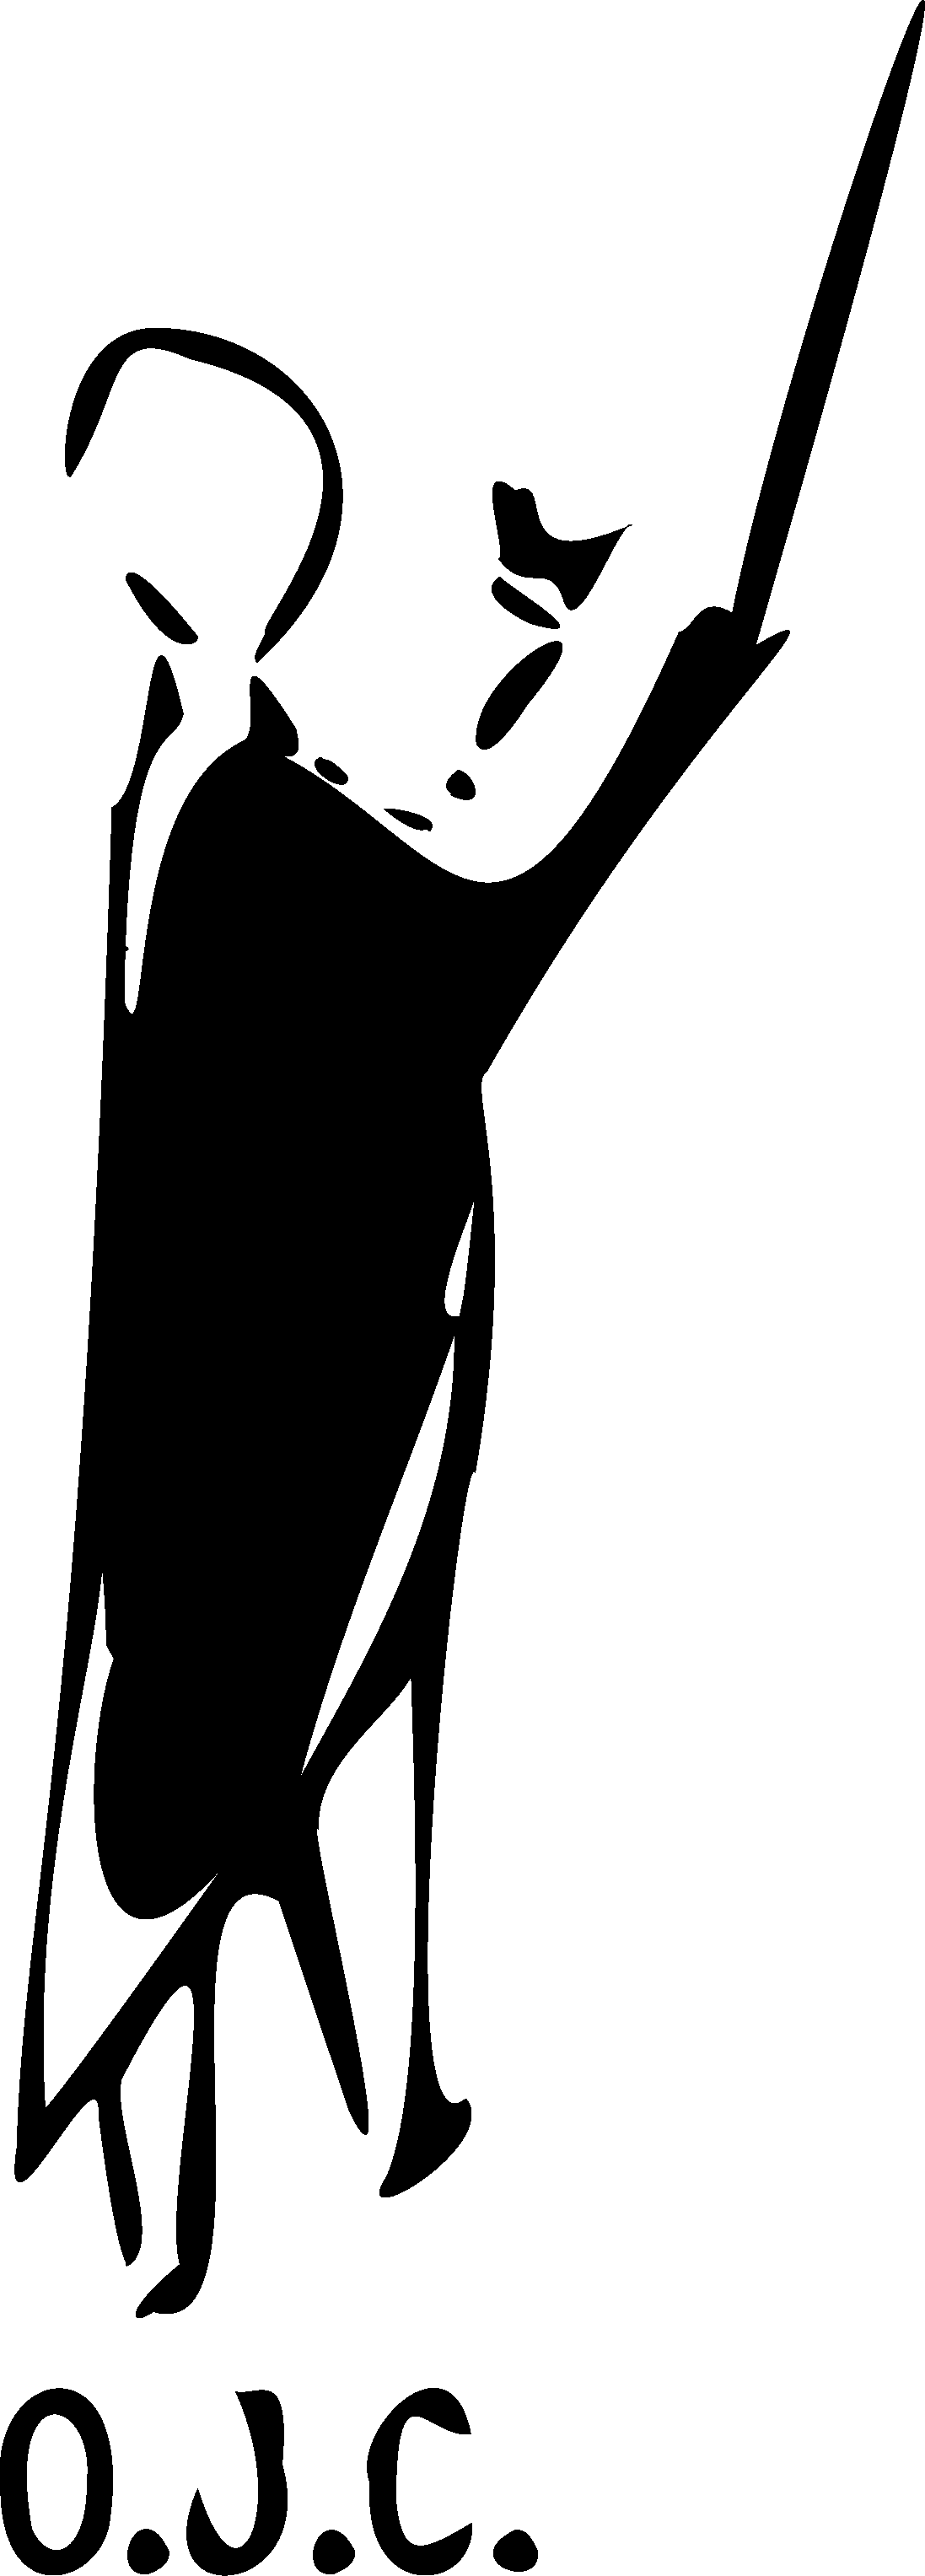 Logo du formulaire